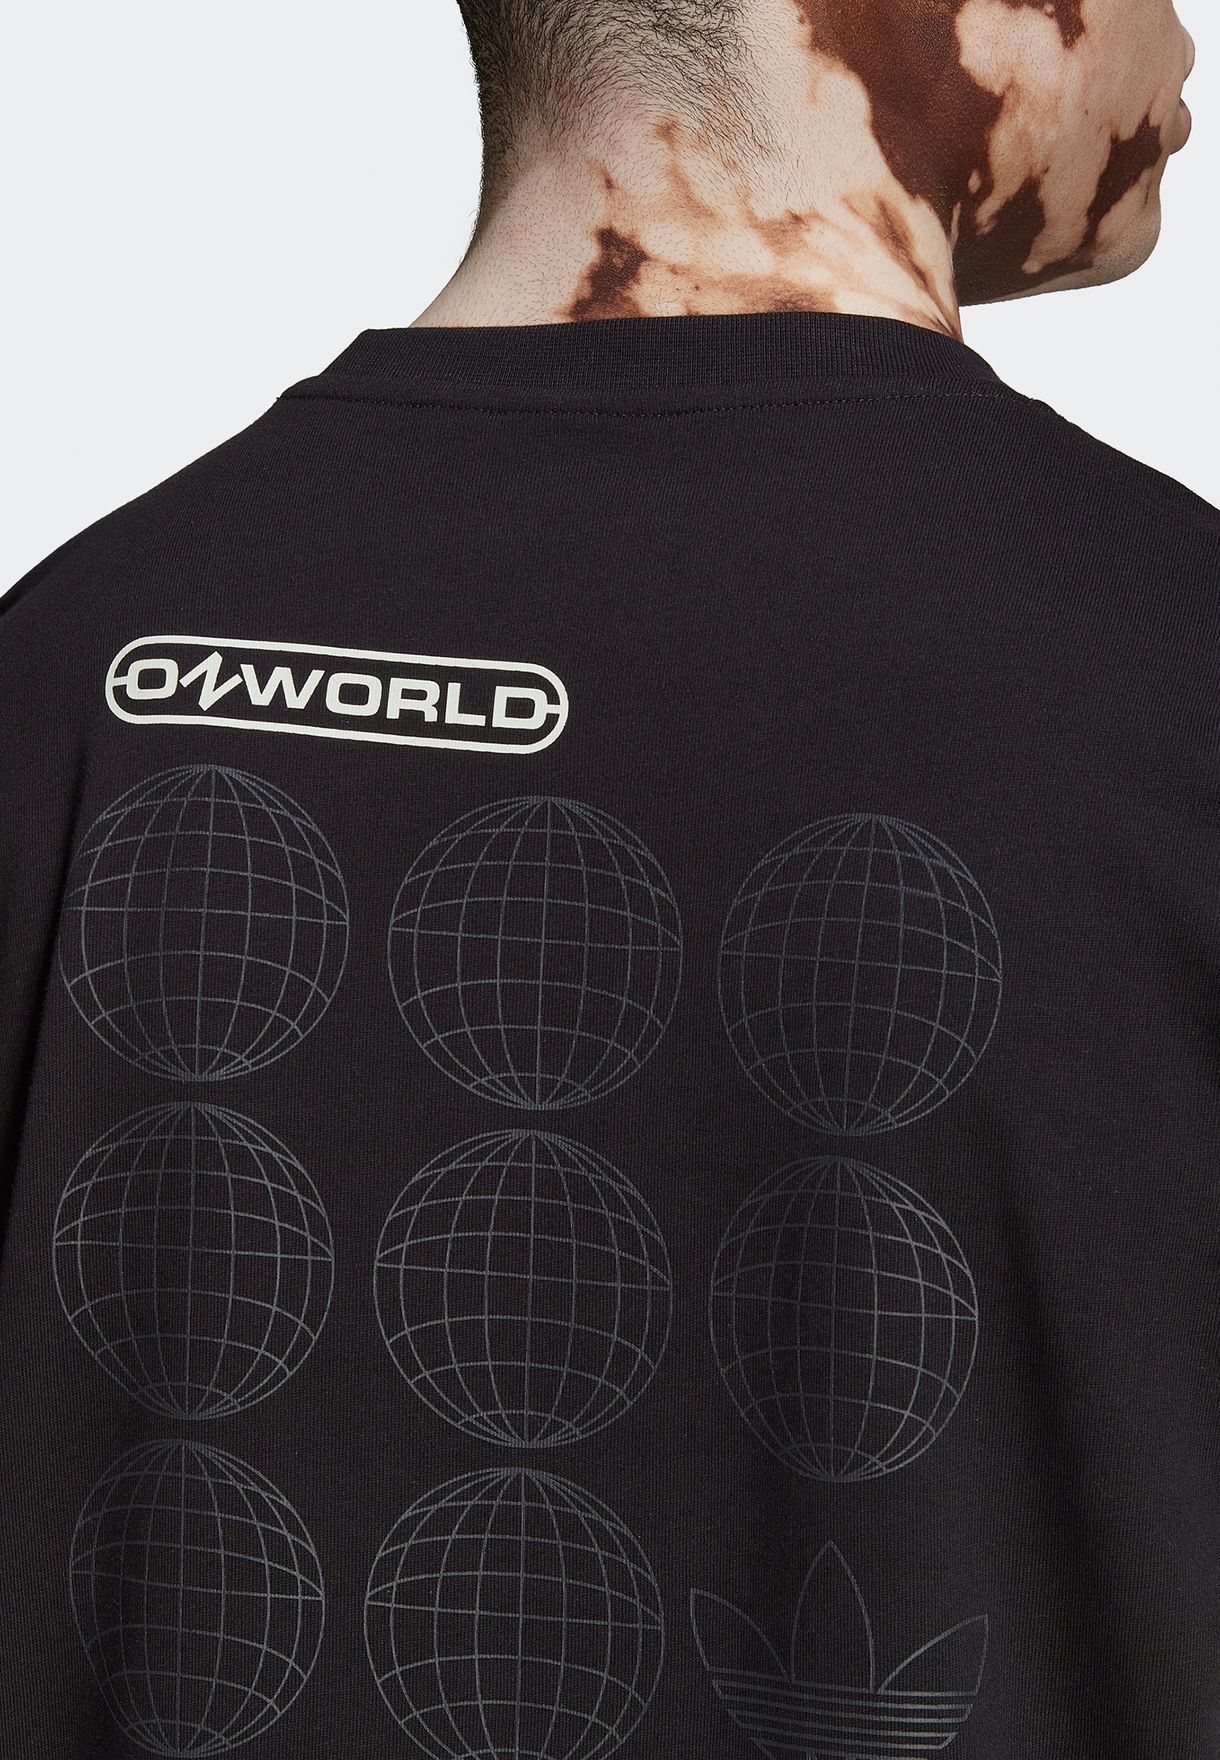 Ozworld Loose T-Shirt